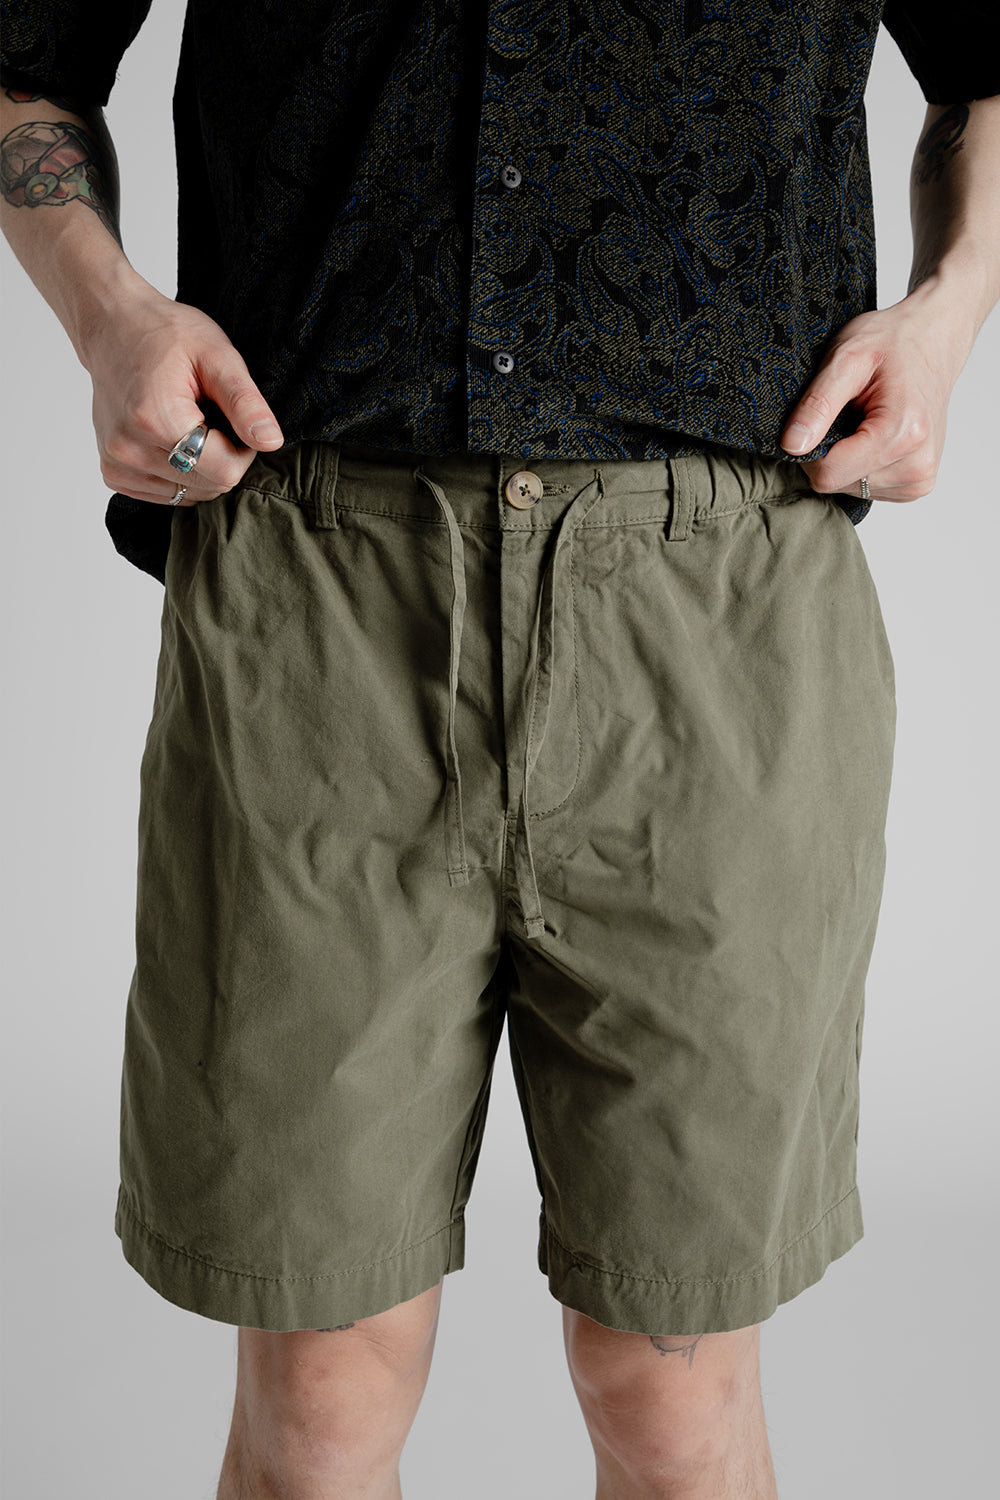 Colsie Shorts Medium Dried Oregano Colsie Green Shorts colsie